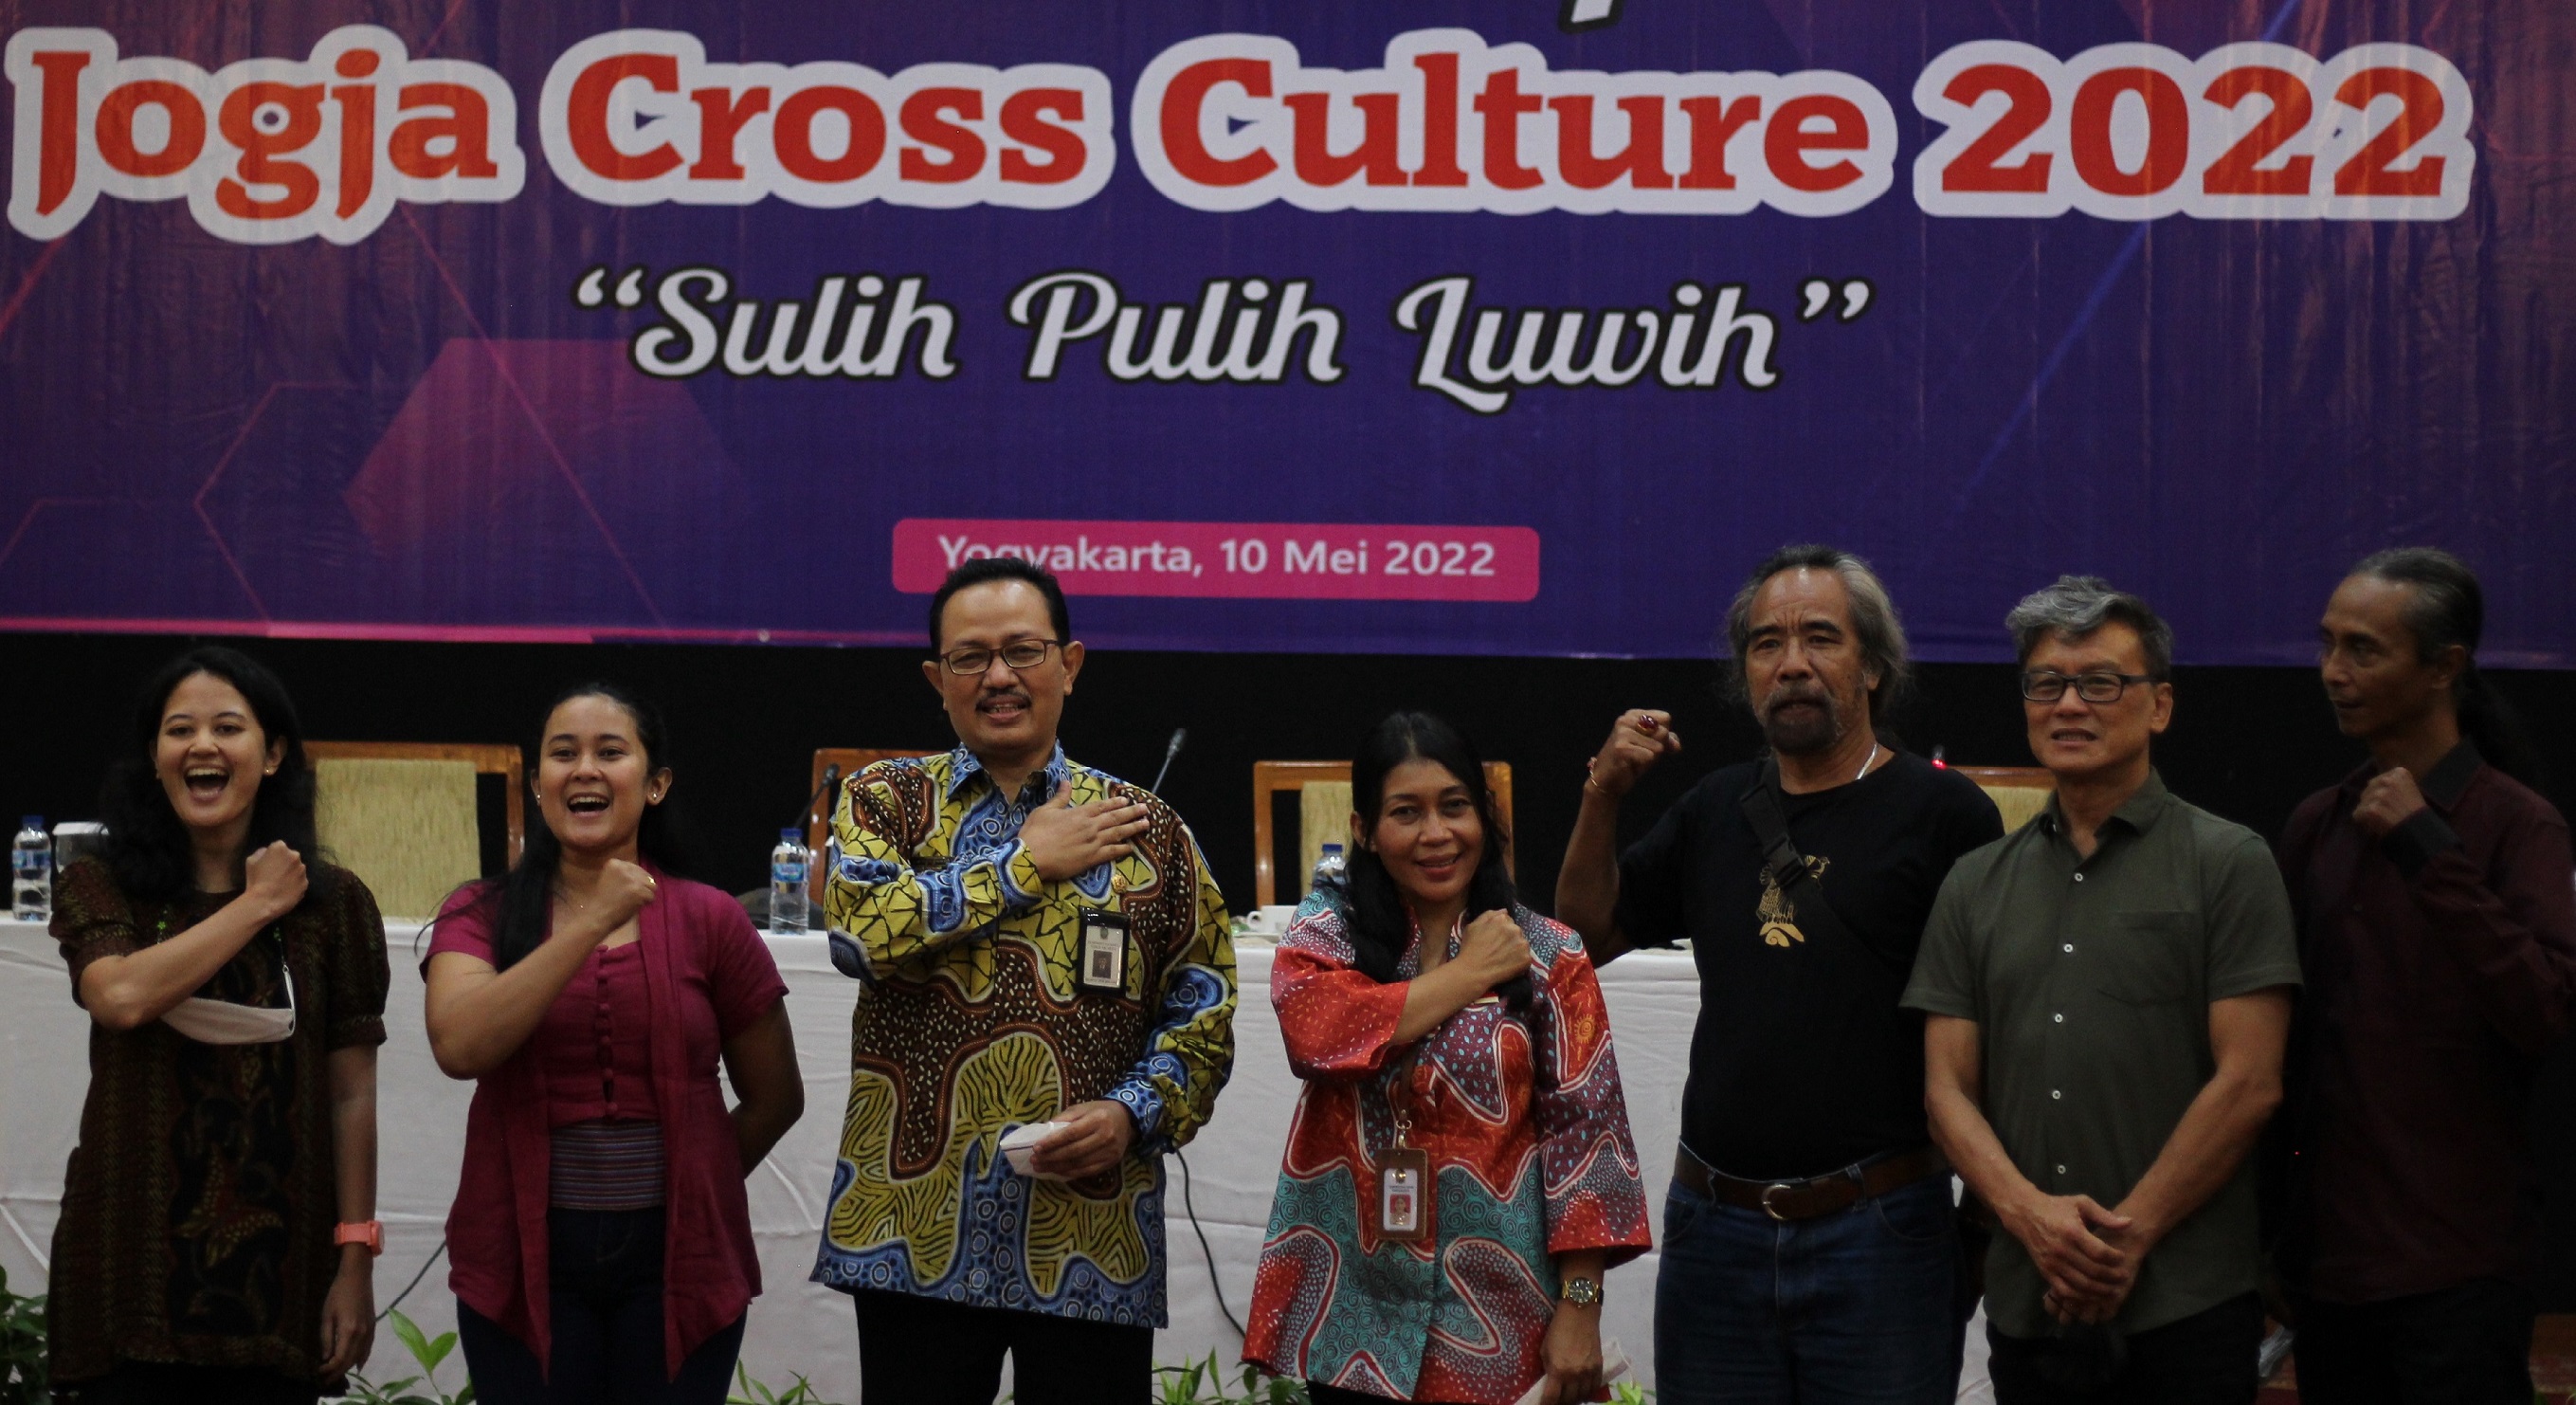 Jogja Cross Culture 2022 Optimisme Yogya Jadi Pusat Seni Budaya